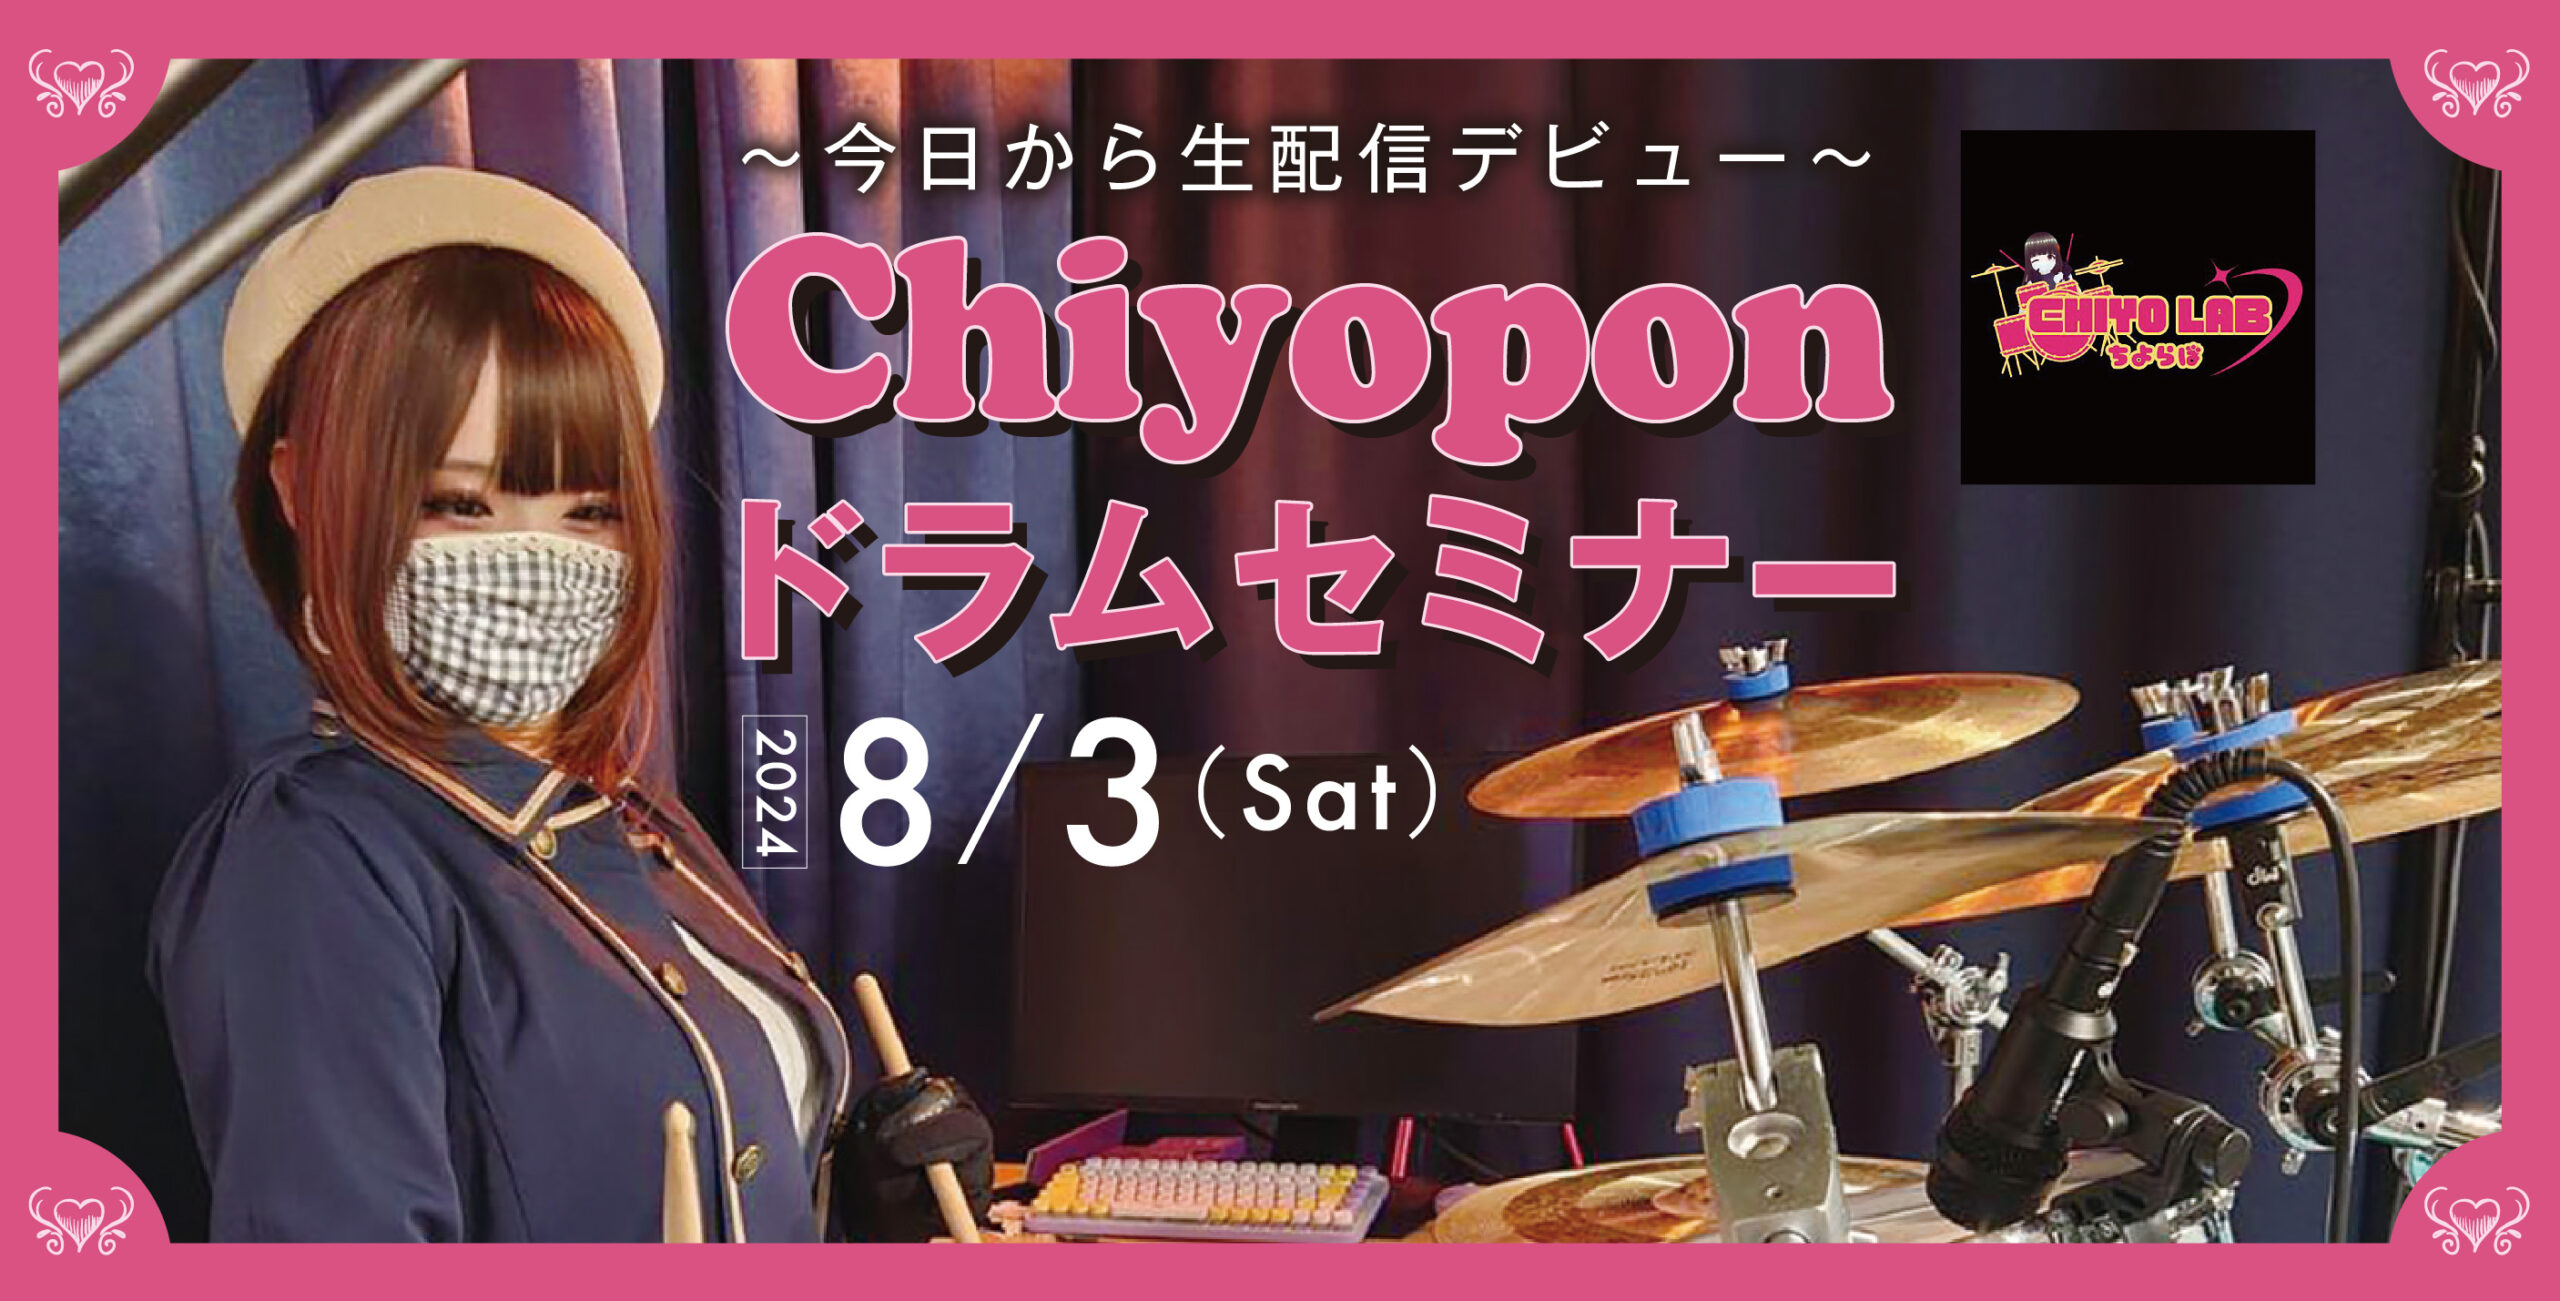 Chiyopon ドラムセミナー info